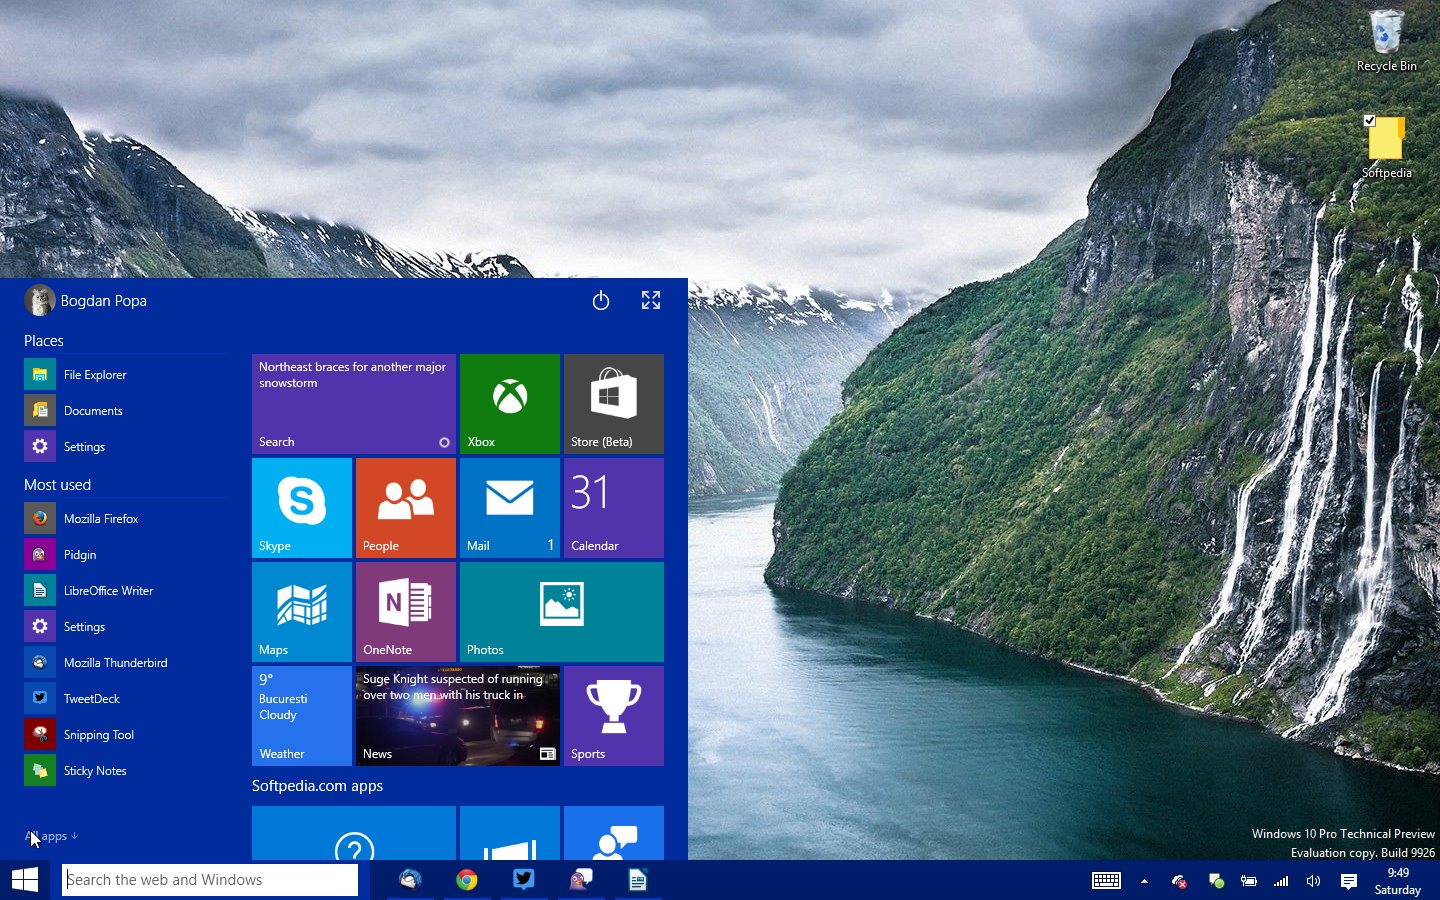 Windows 10 build 9926